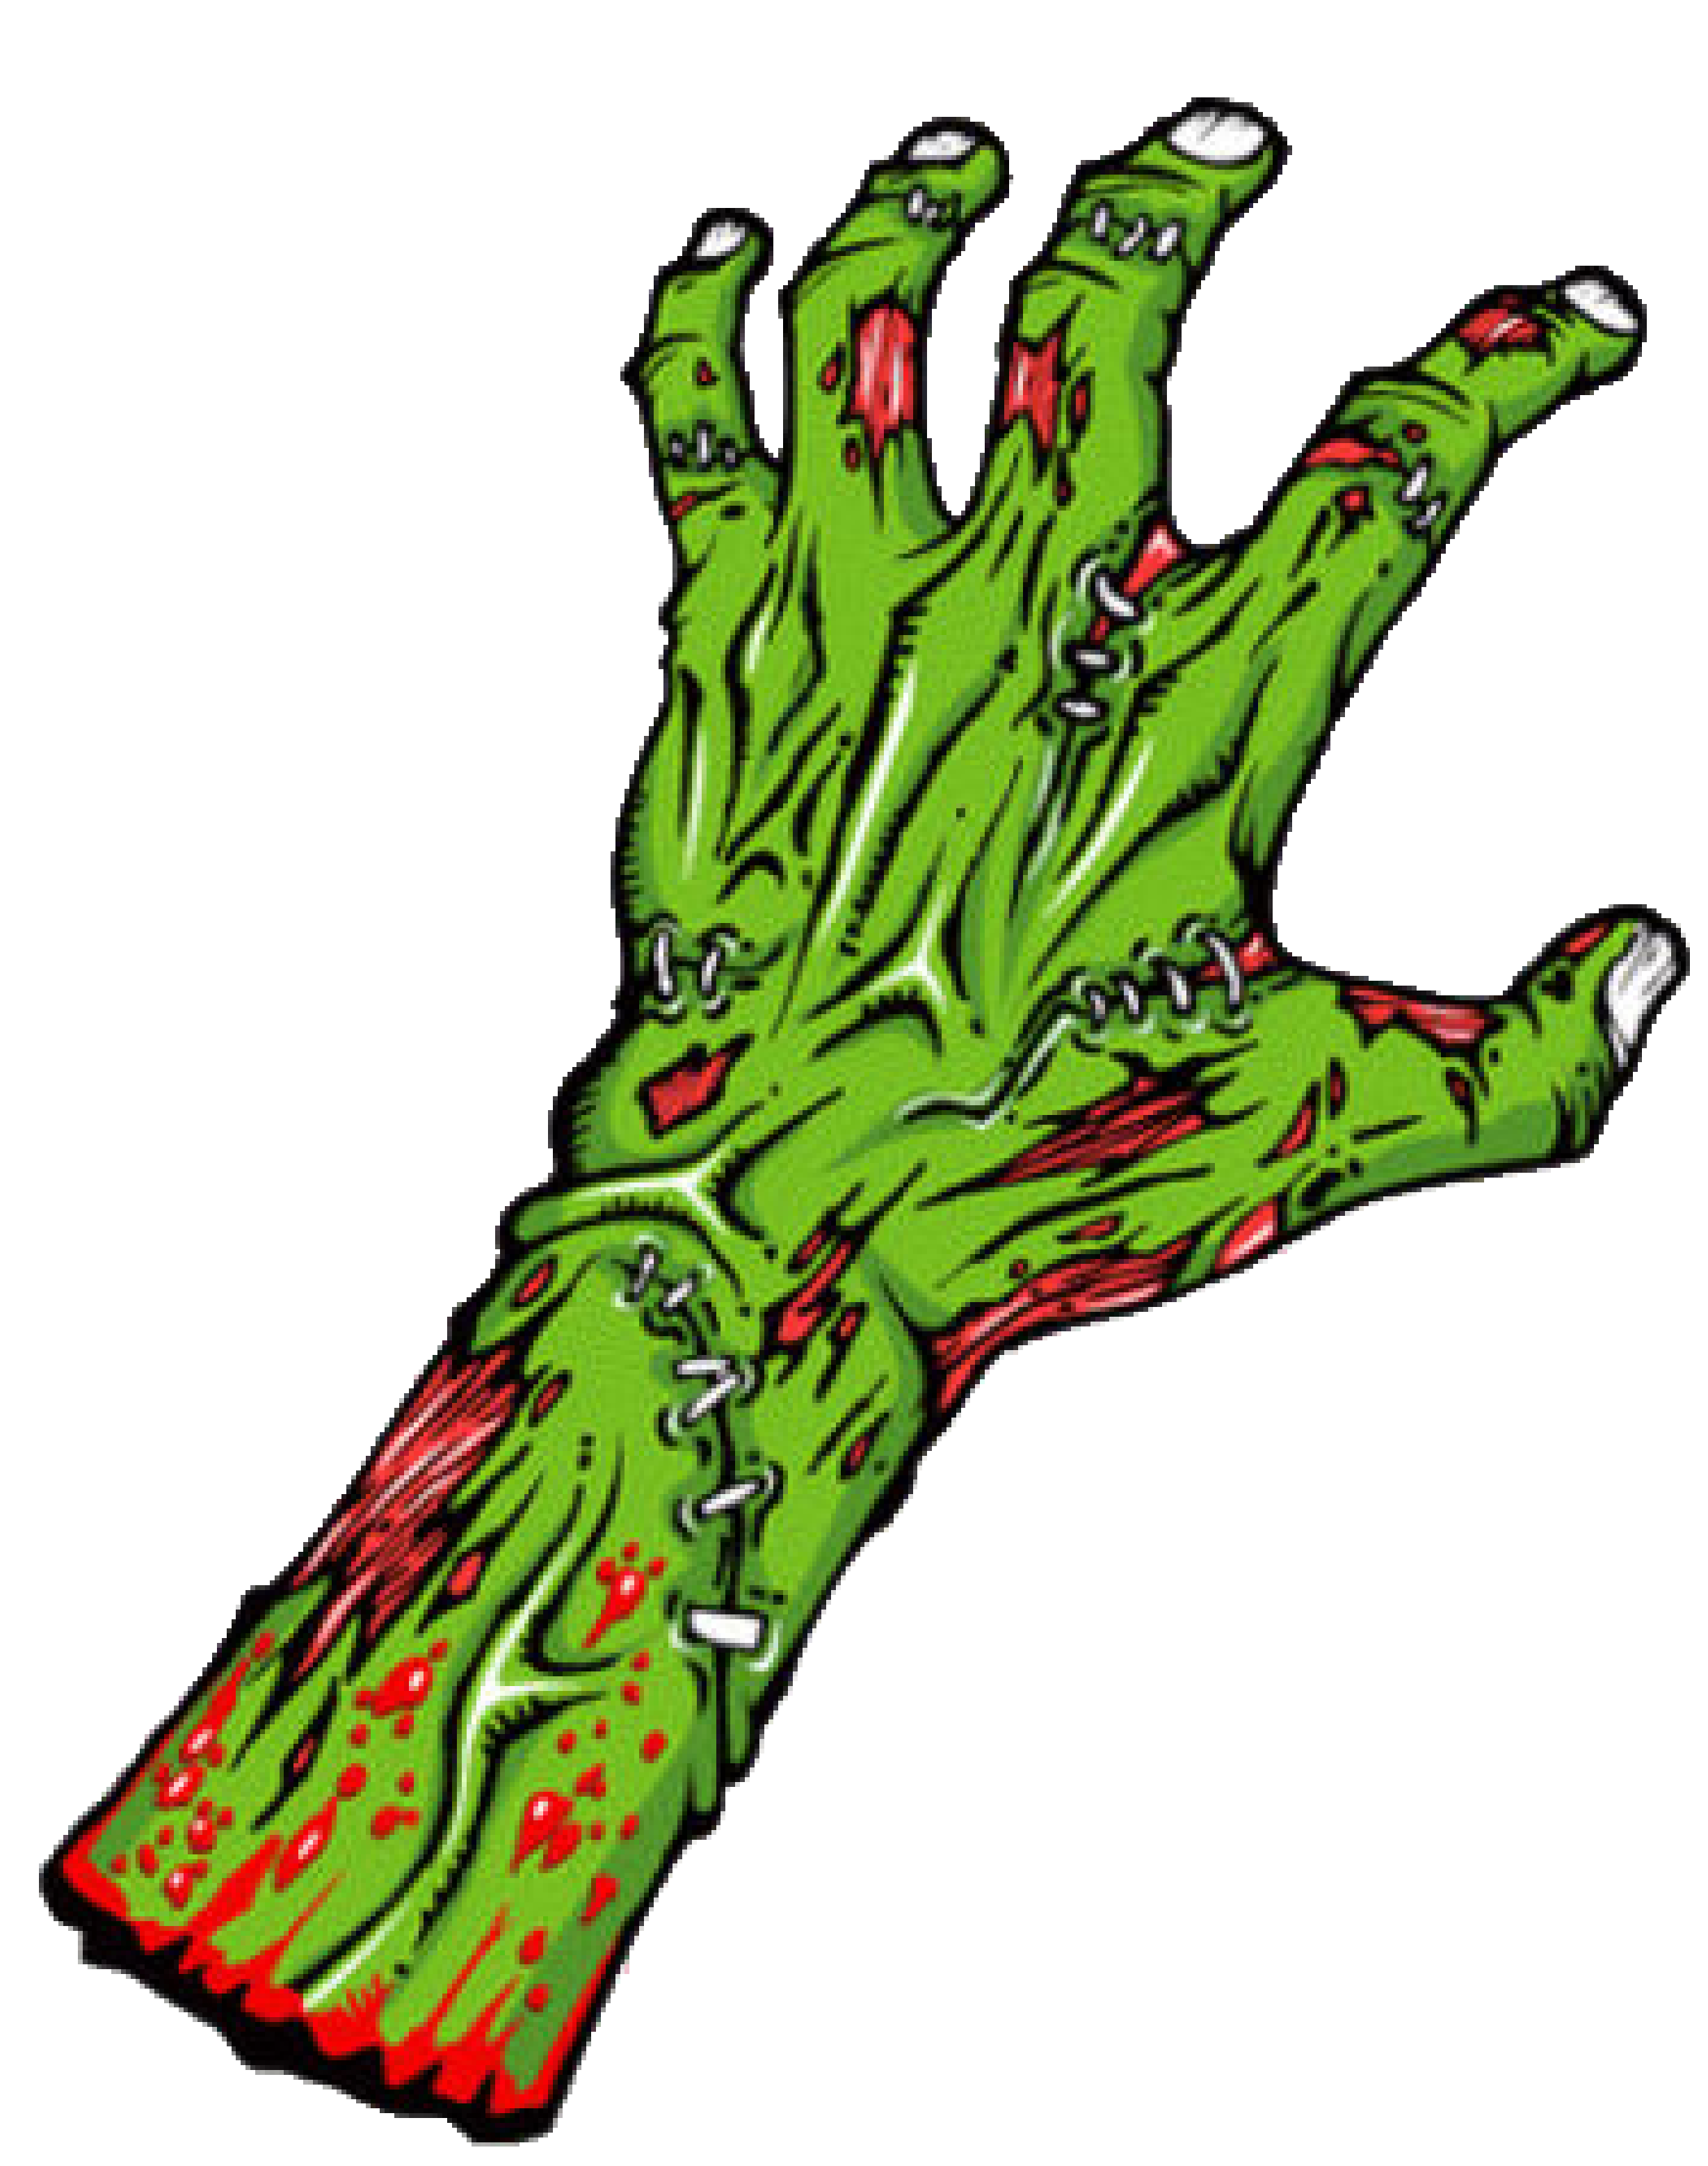 Zombie Hand Cut   Free Images At Clker Com   Vector Clip Art Online